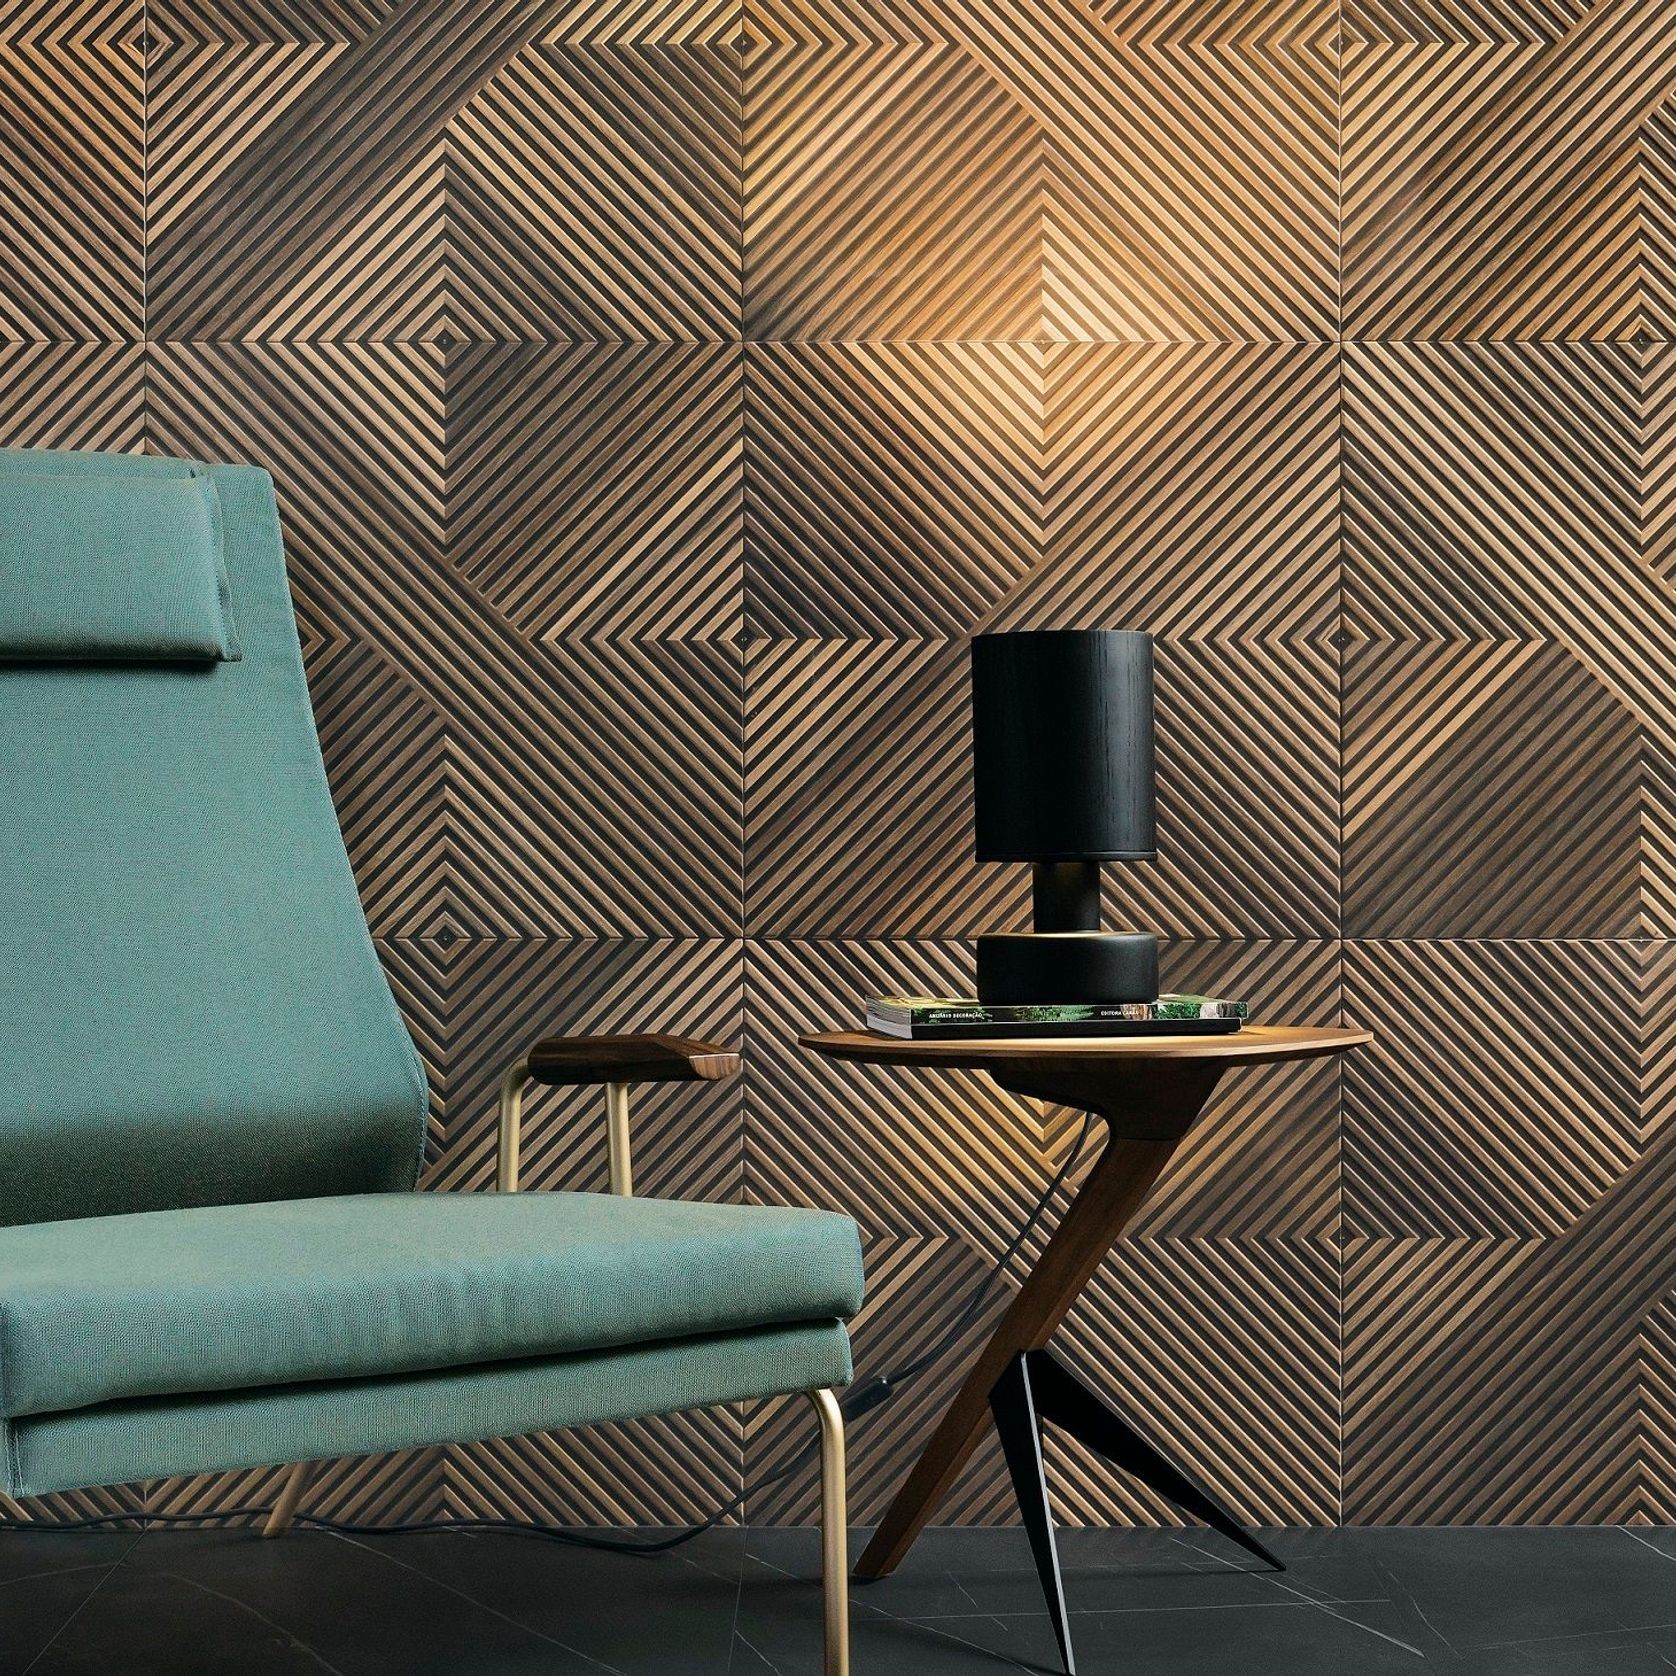 Tavola Wall & Floor Tiles gallery detail image